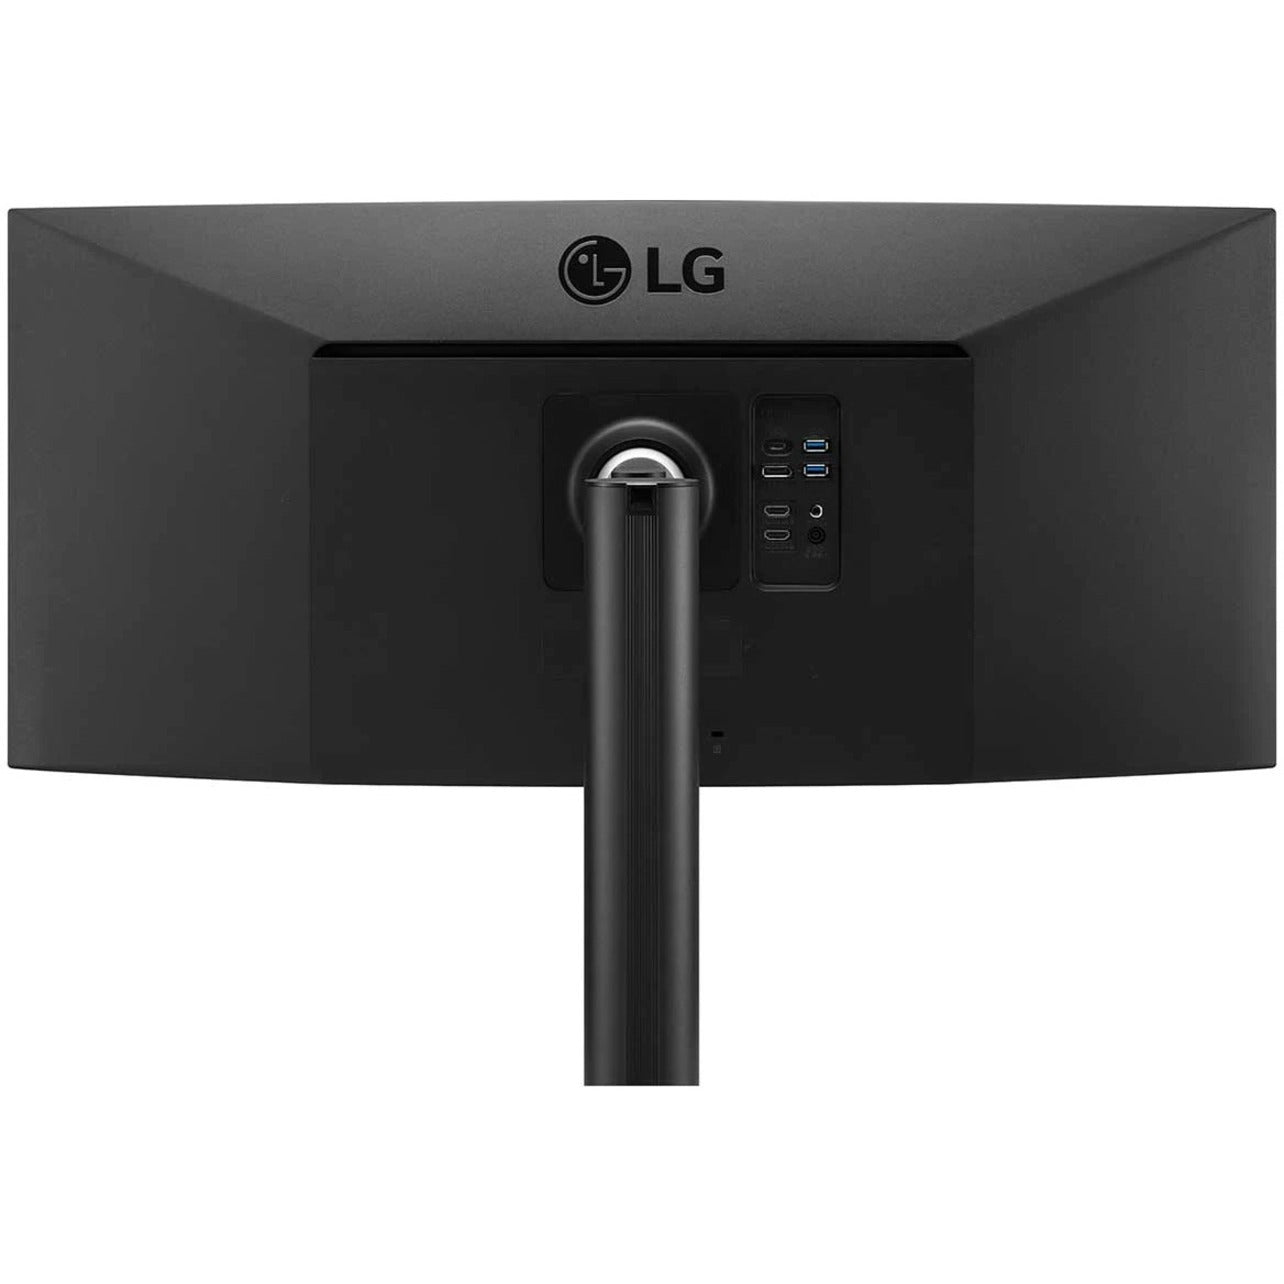 LG 34BP88CN-B Ultrawide 34" Curved Monitor, 3440x1440, 21:9 IPS, HDMI 2.0 (2), DP, USB Type-C, USB 3.0, AMD FreeSync, HDR 10, Tilt, Height, Speakers